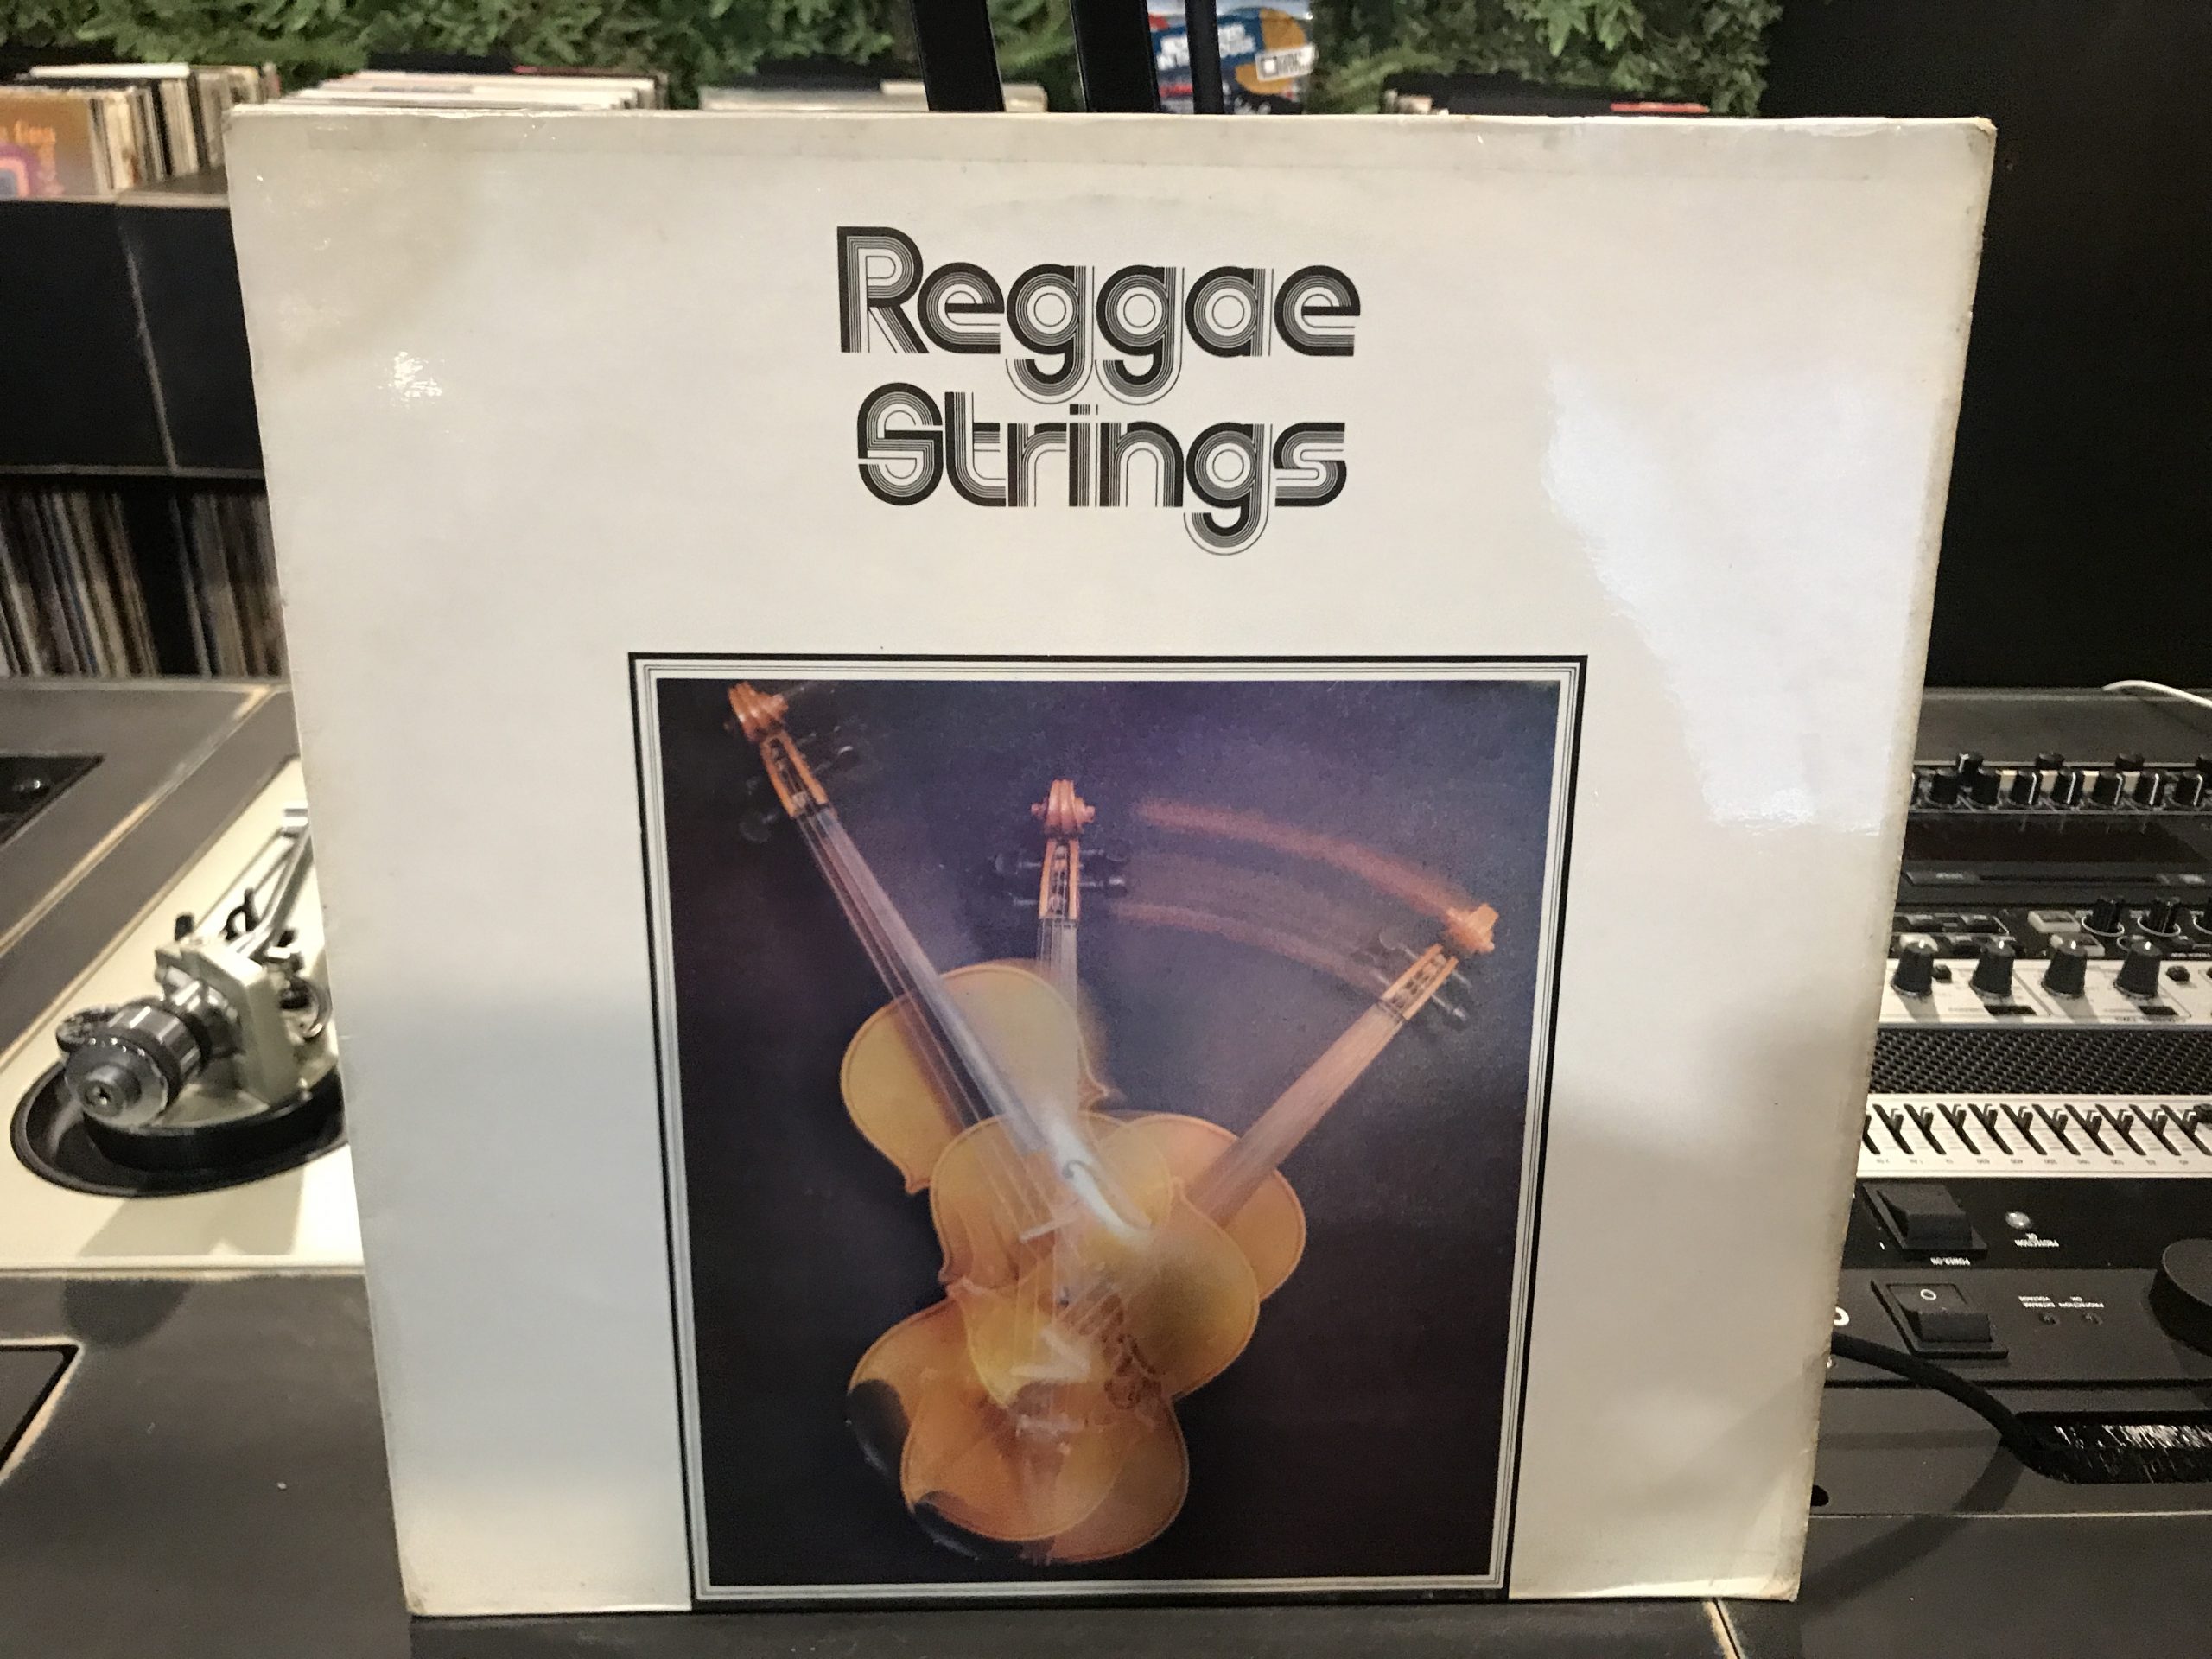 Reggae Strings